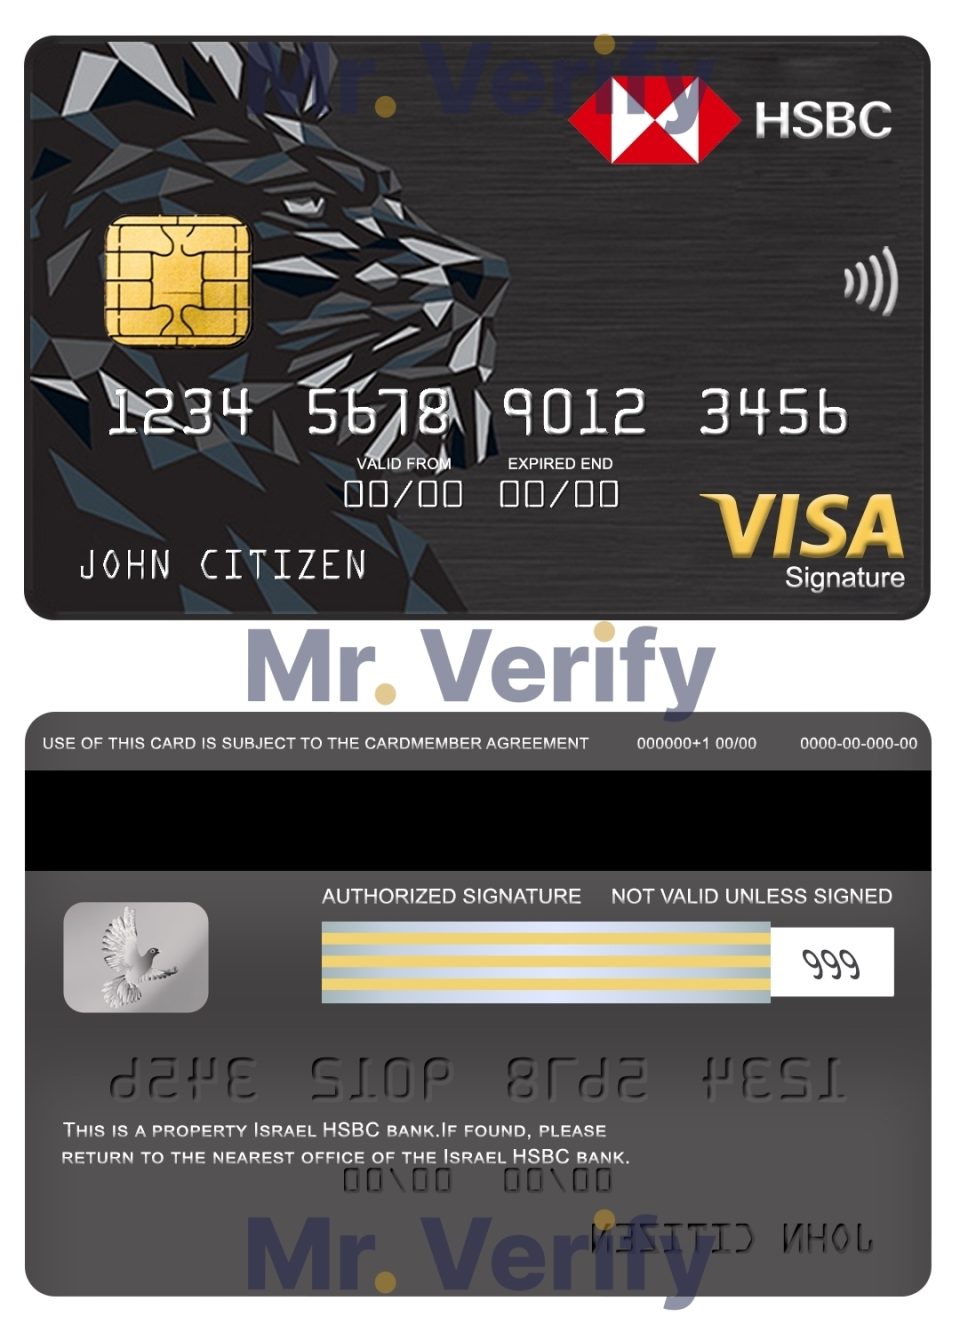 Editable Israel HSBC bank visa signature card Templates in PSD Format